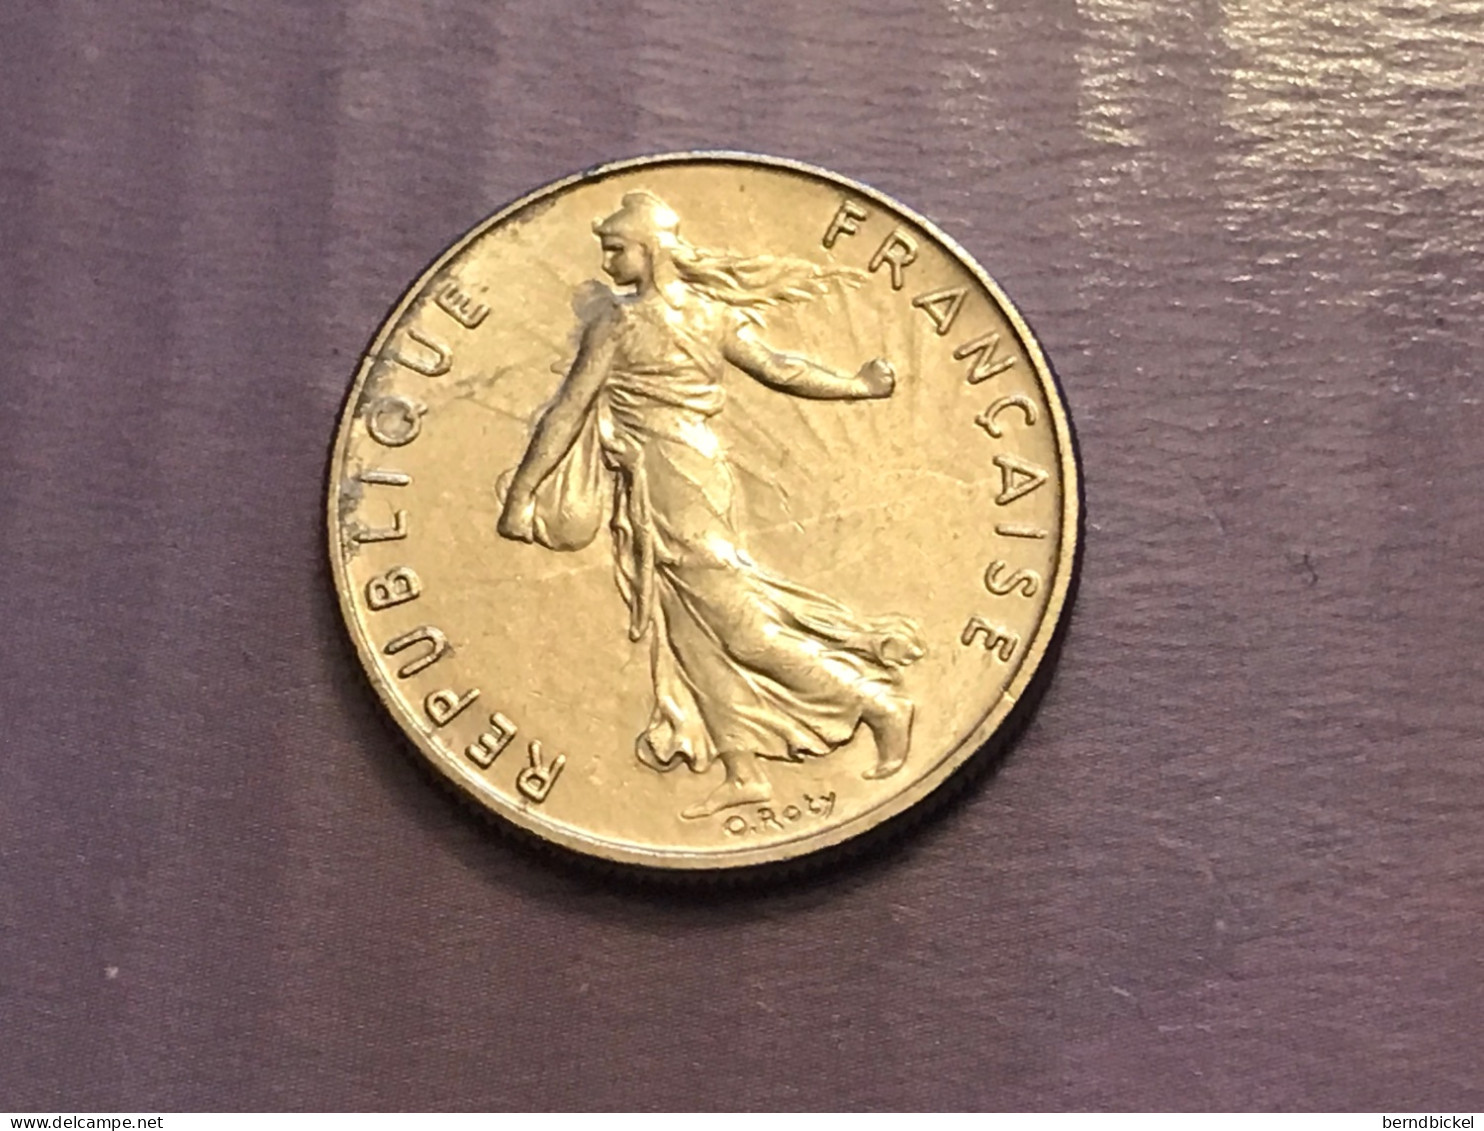 Münze Münzen Umlaufmünze Frankreich 1/2 Franc 1983 - 1/2 Franc